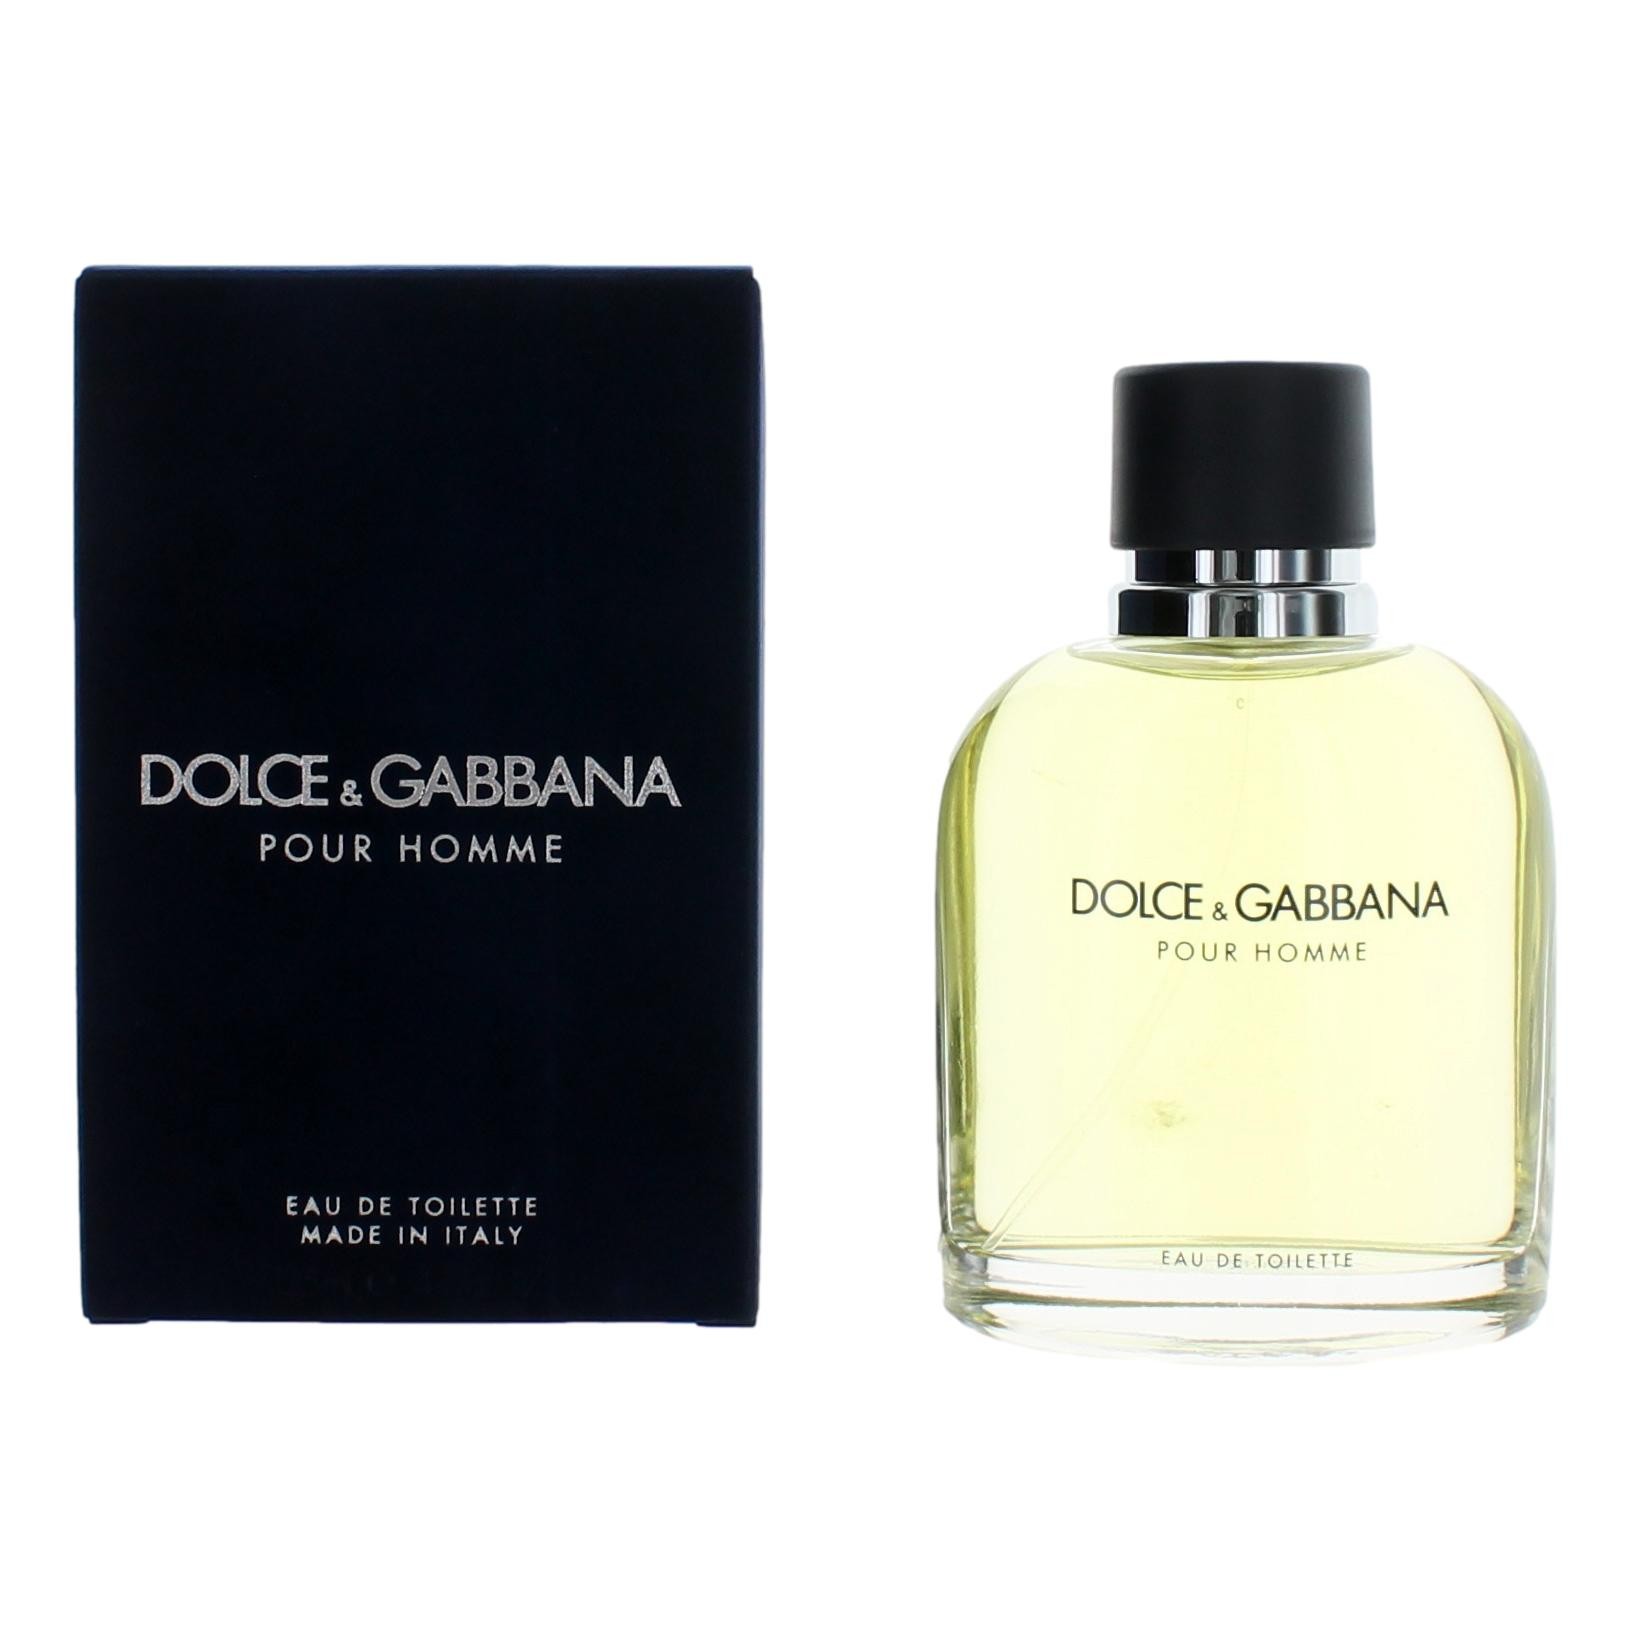 DOLCE & GABBANA by Dolce & Gabbana Eau De Toilette Spray 4.2 oz for Men ...